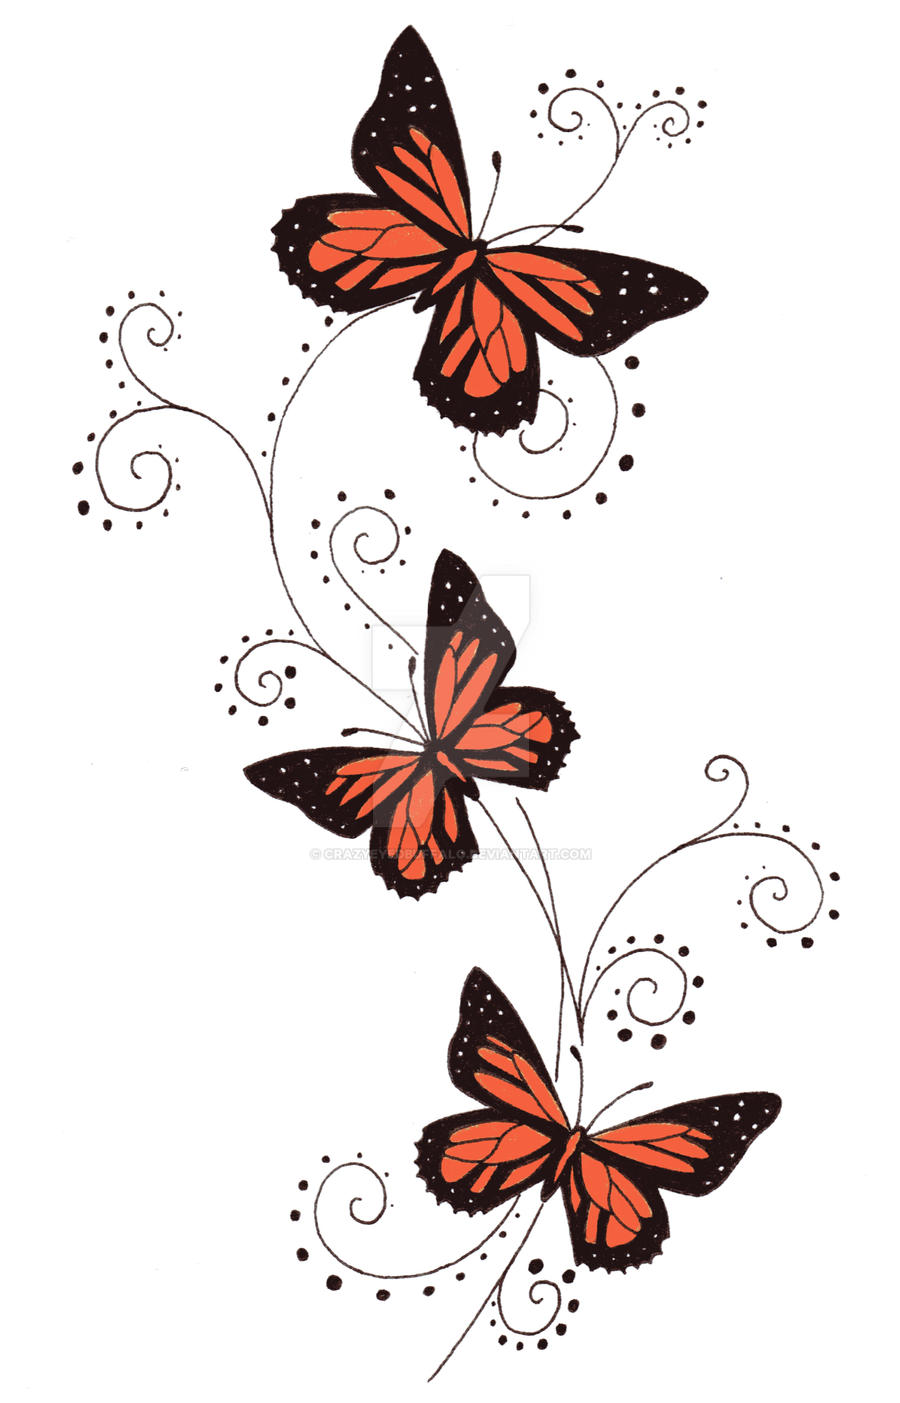 Orange butterfly swirls by crazyeyedbuffalo on DeviantArt